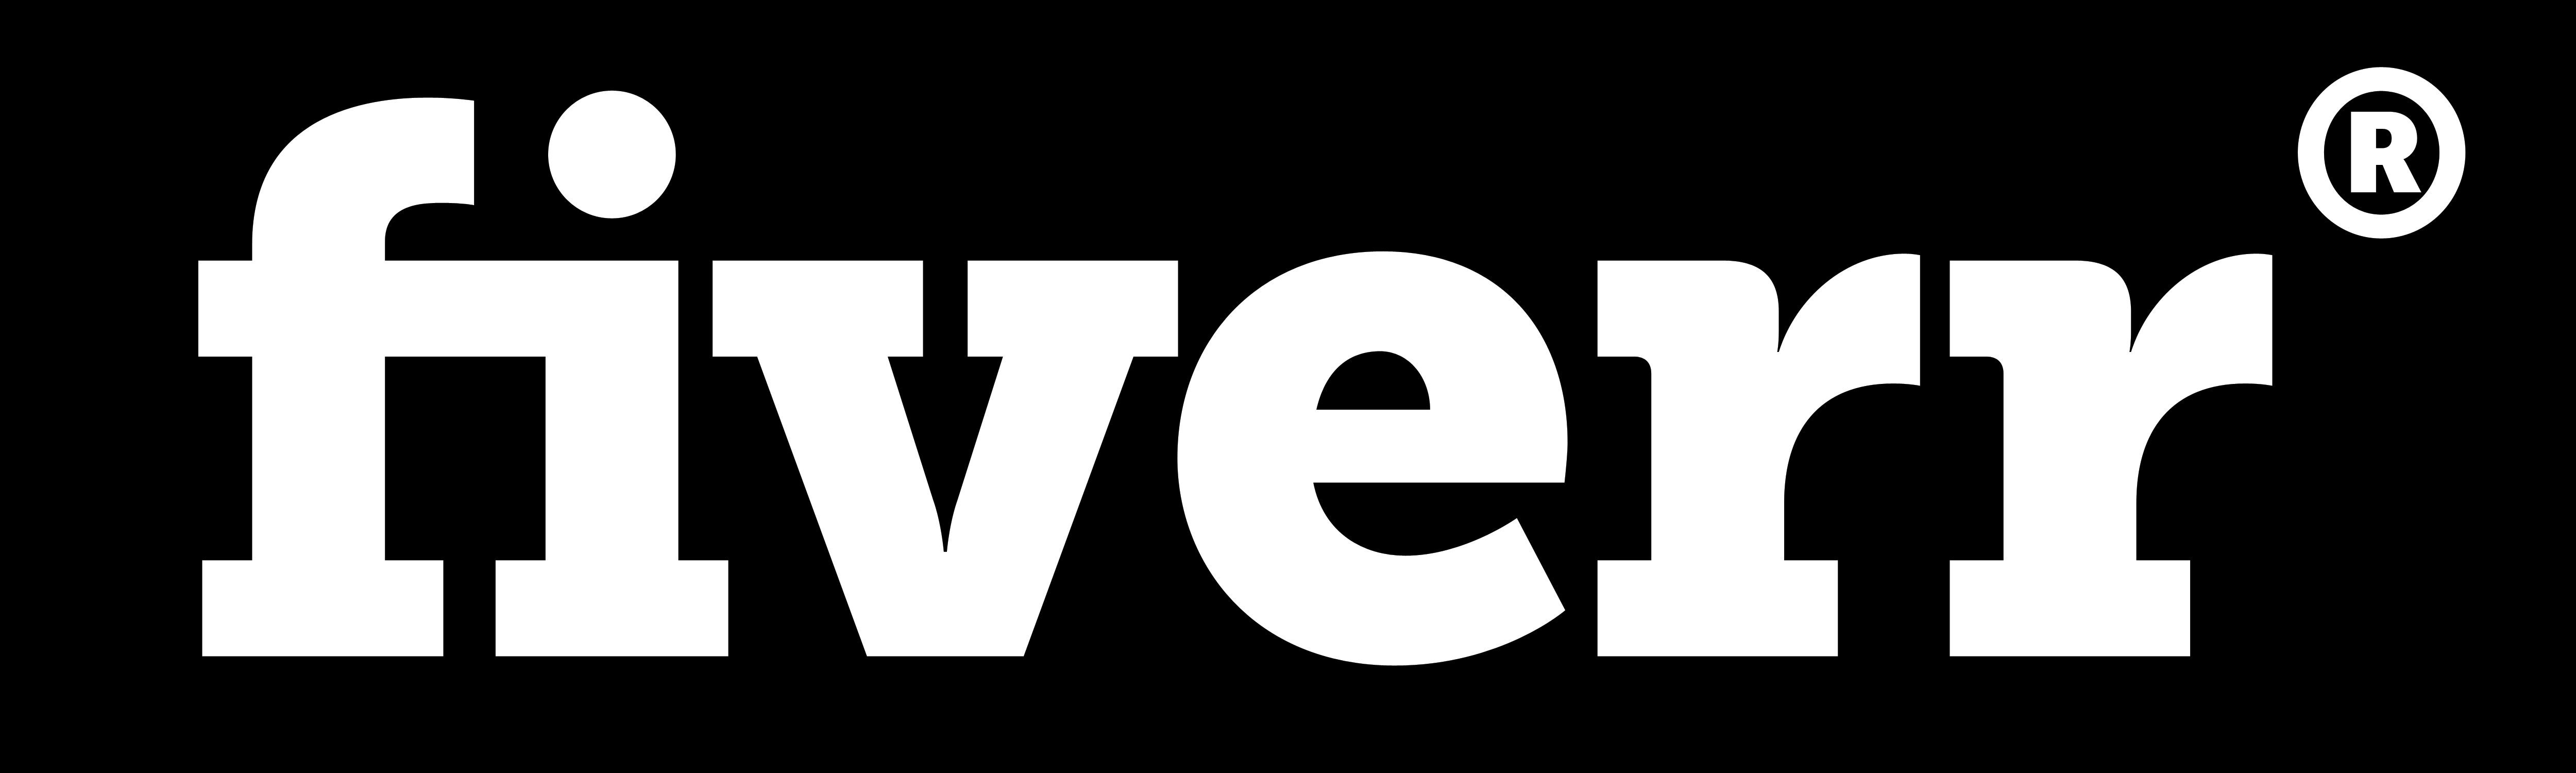 fiverr logo 04